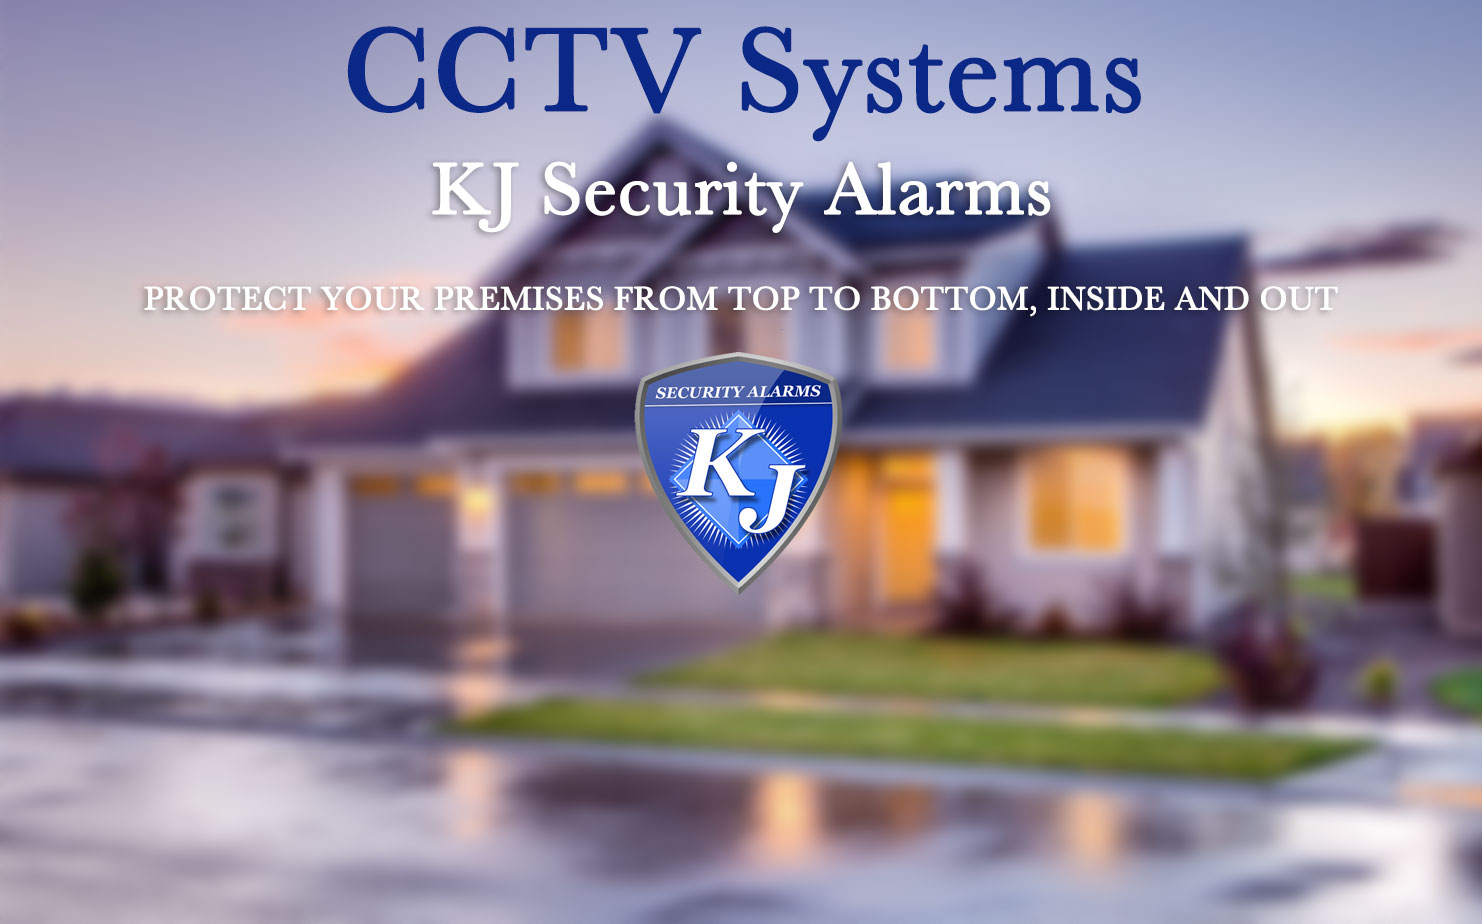 KJ Security Alarms